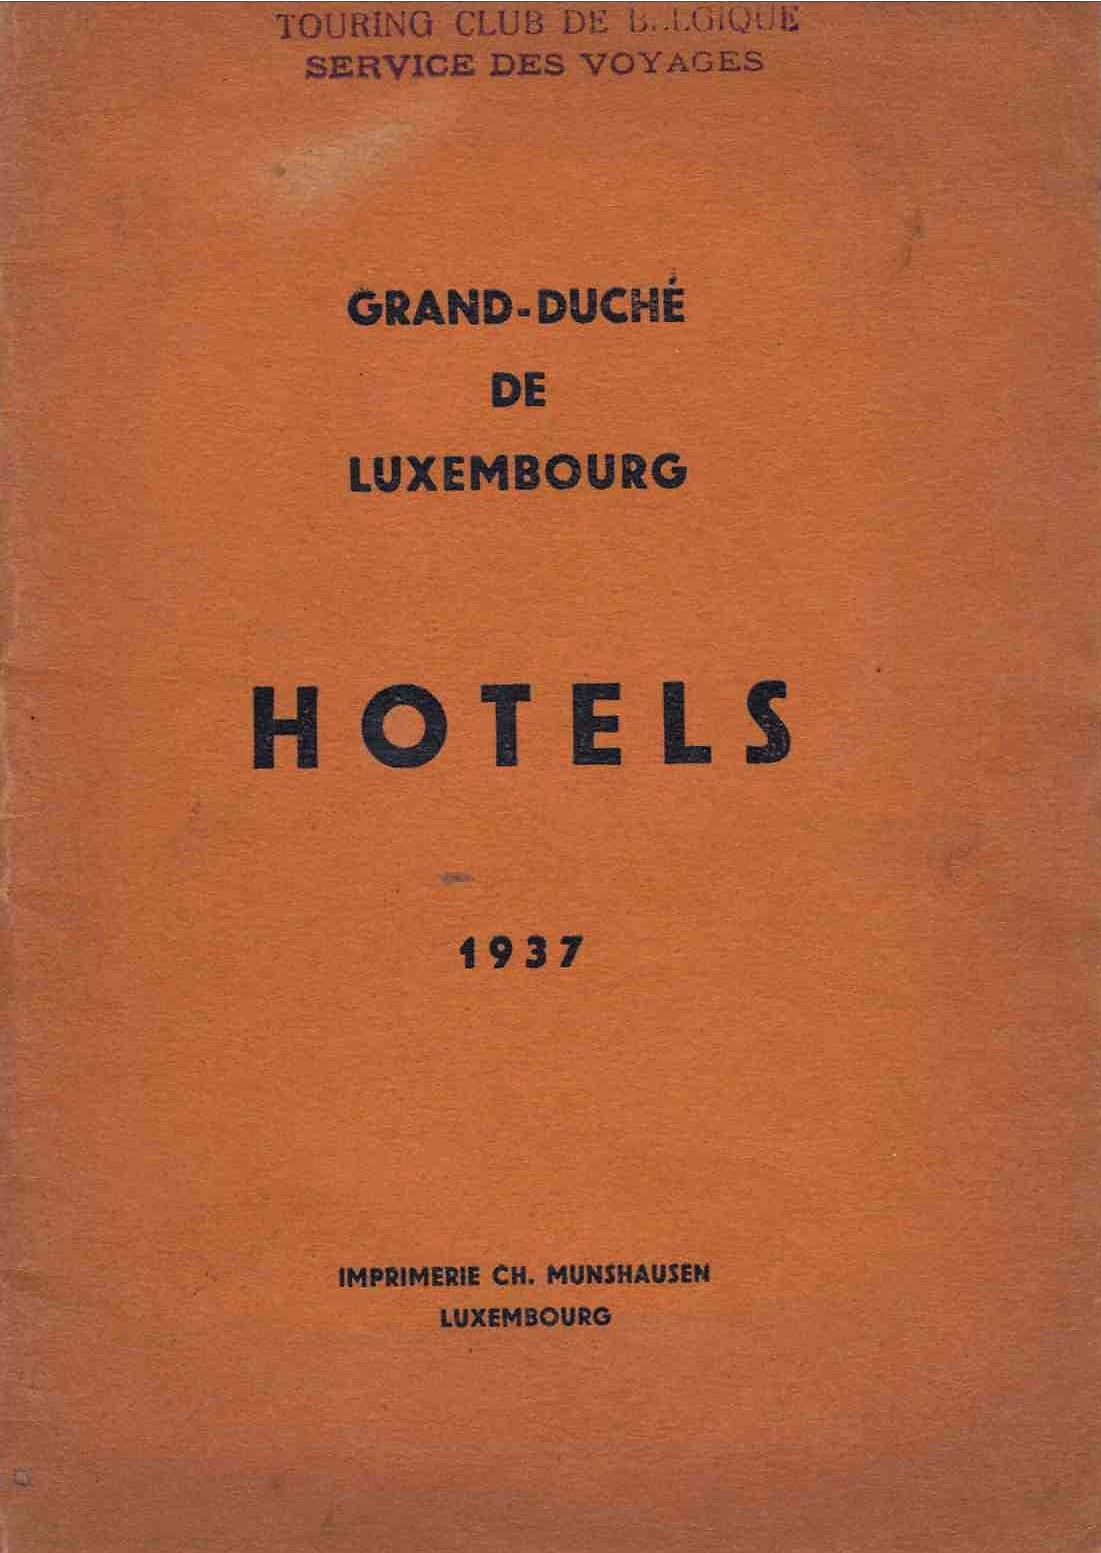 Null (Turismo) Gran Ducado de Luxemburgo: Hoteles, 1937 + Cartel "Grande kermess&hellip;